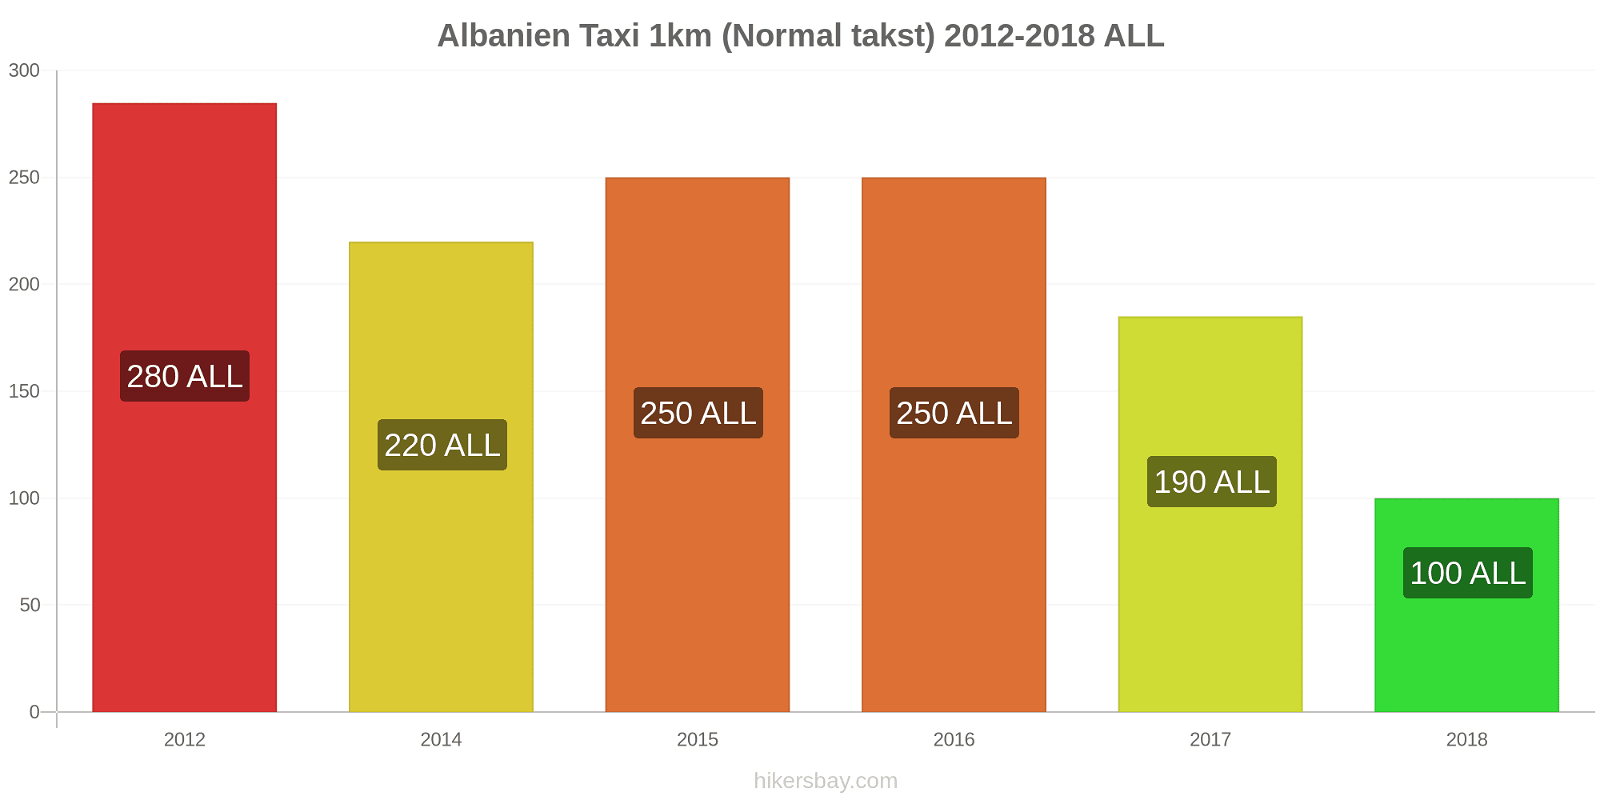 Albanien prisændringer Taxi 1km (normal takst) hikersbay.com